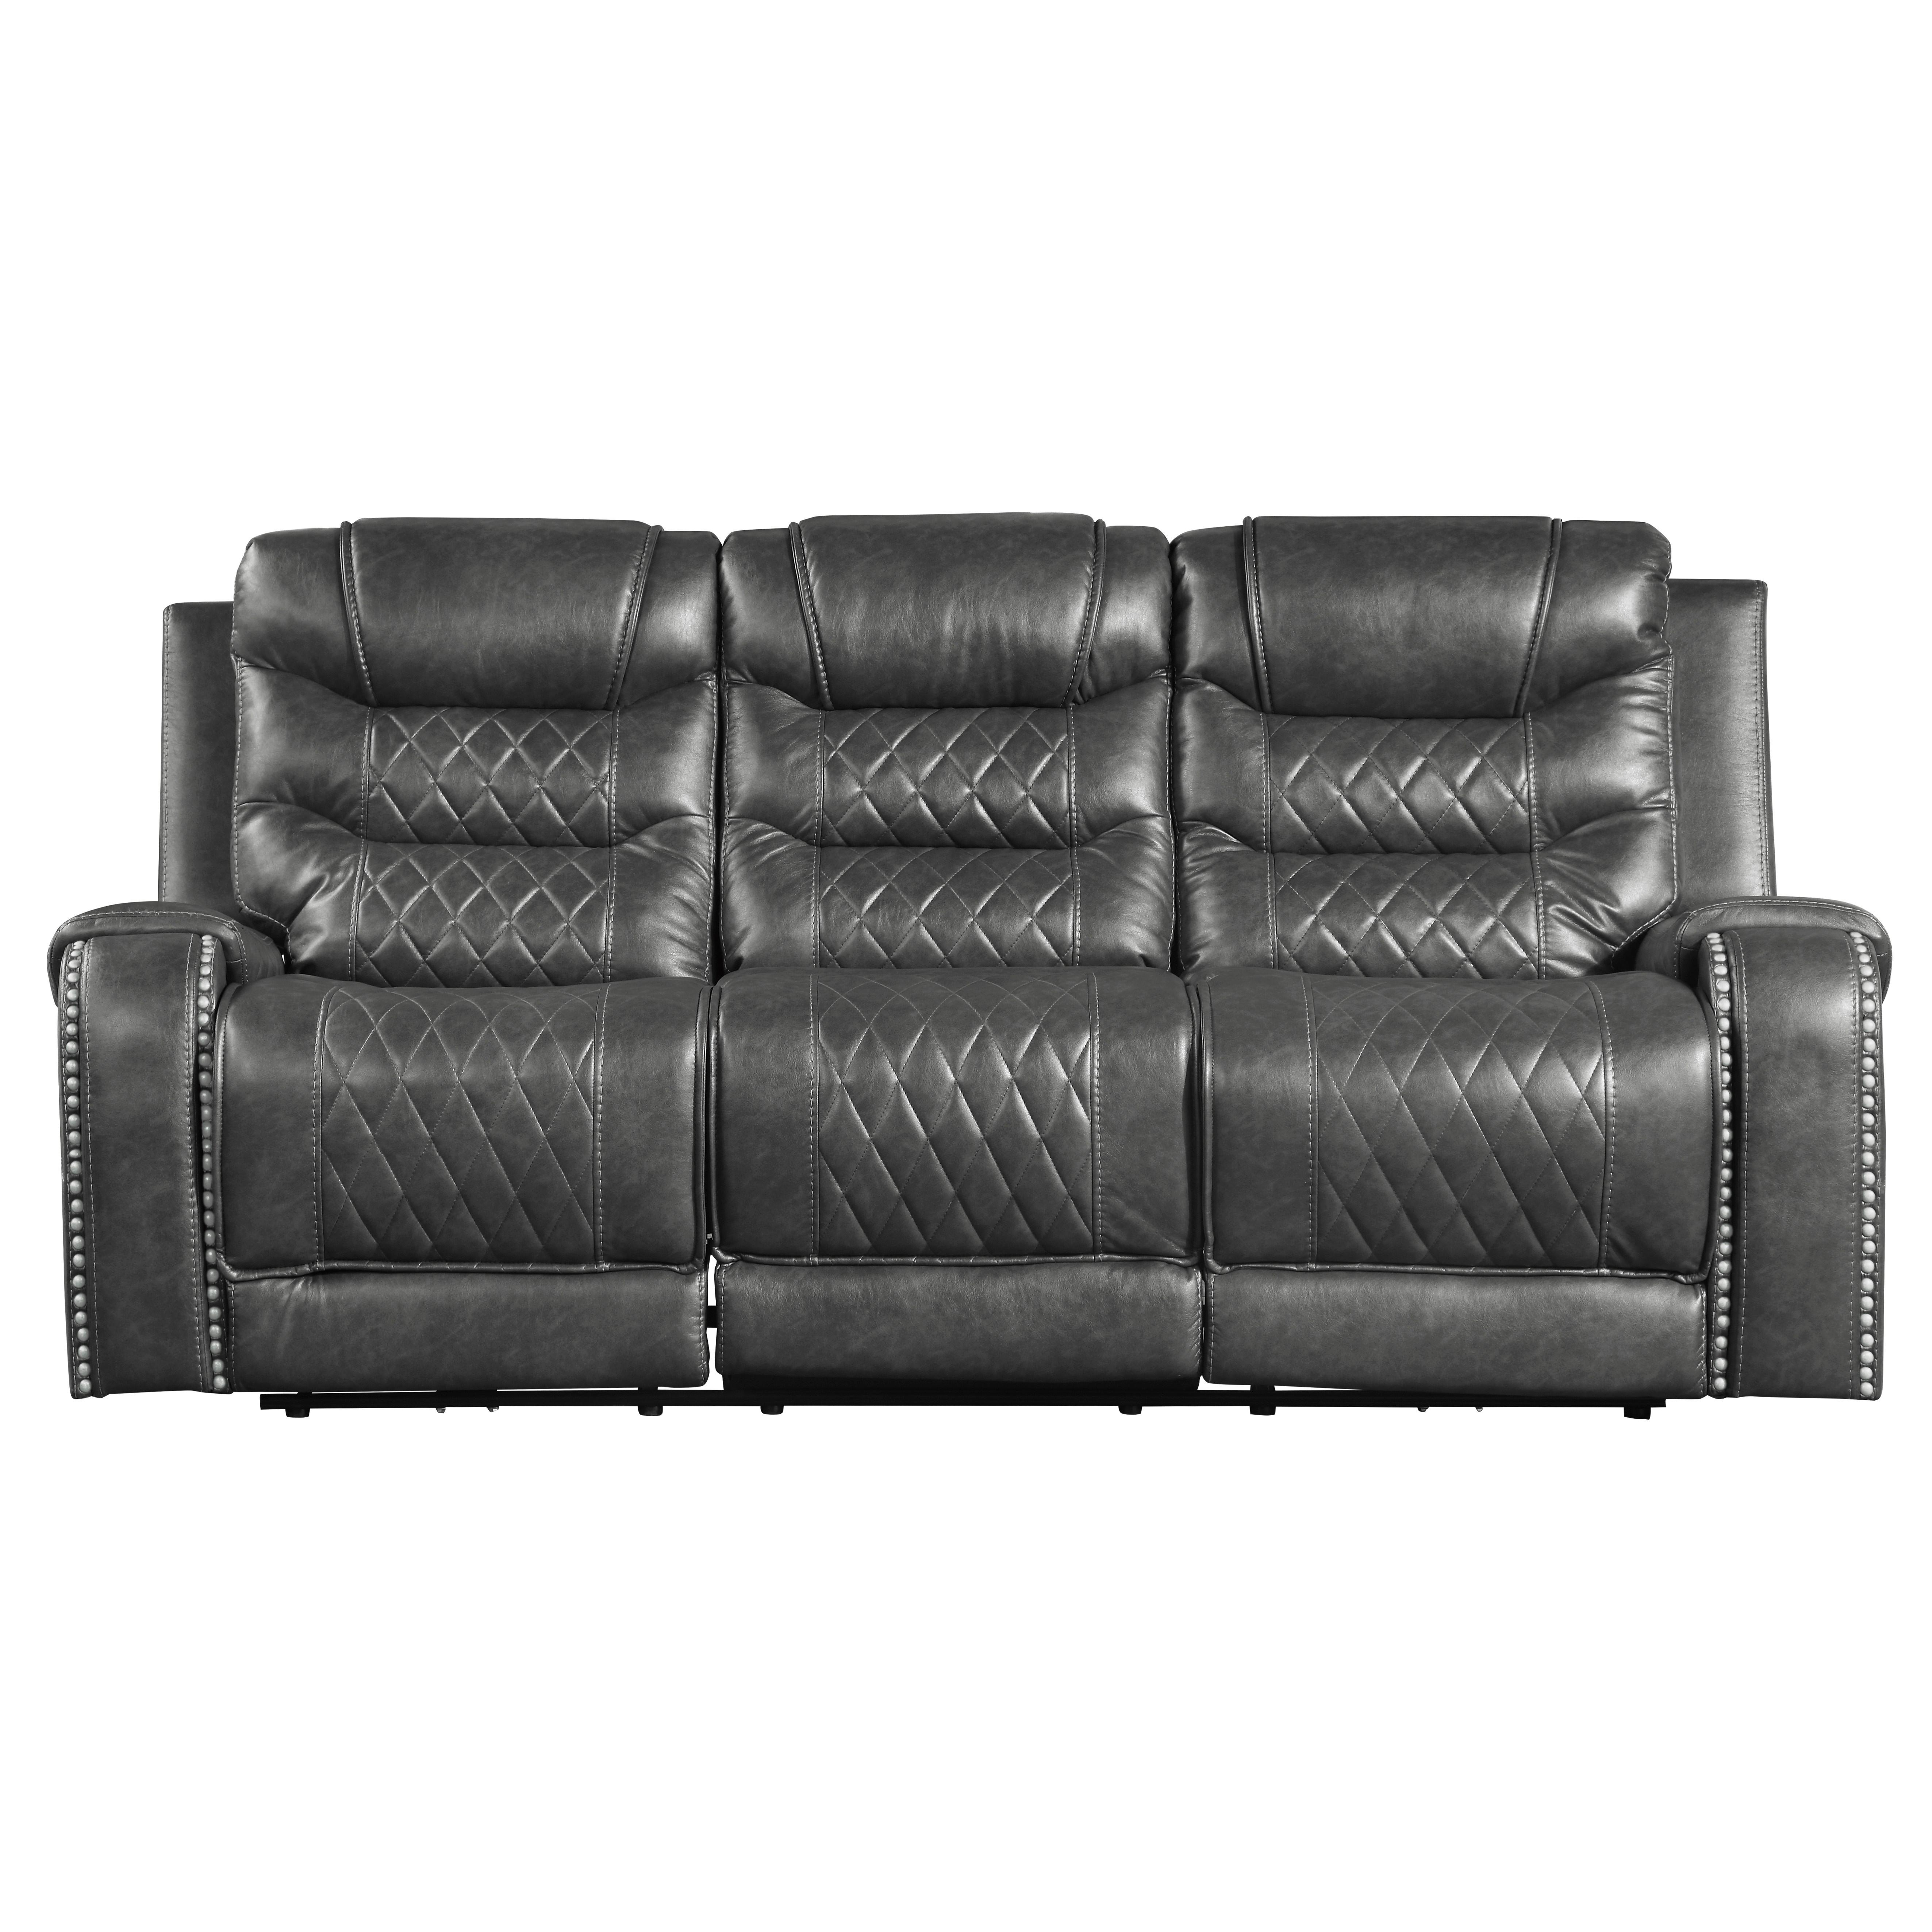 Homelegance 9405GY-3 Putnam Reclining Sofa